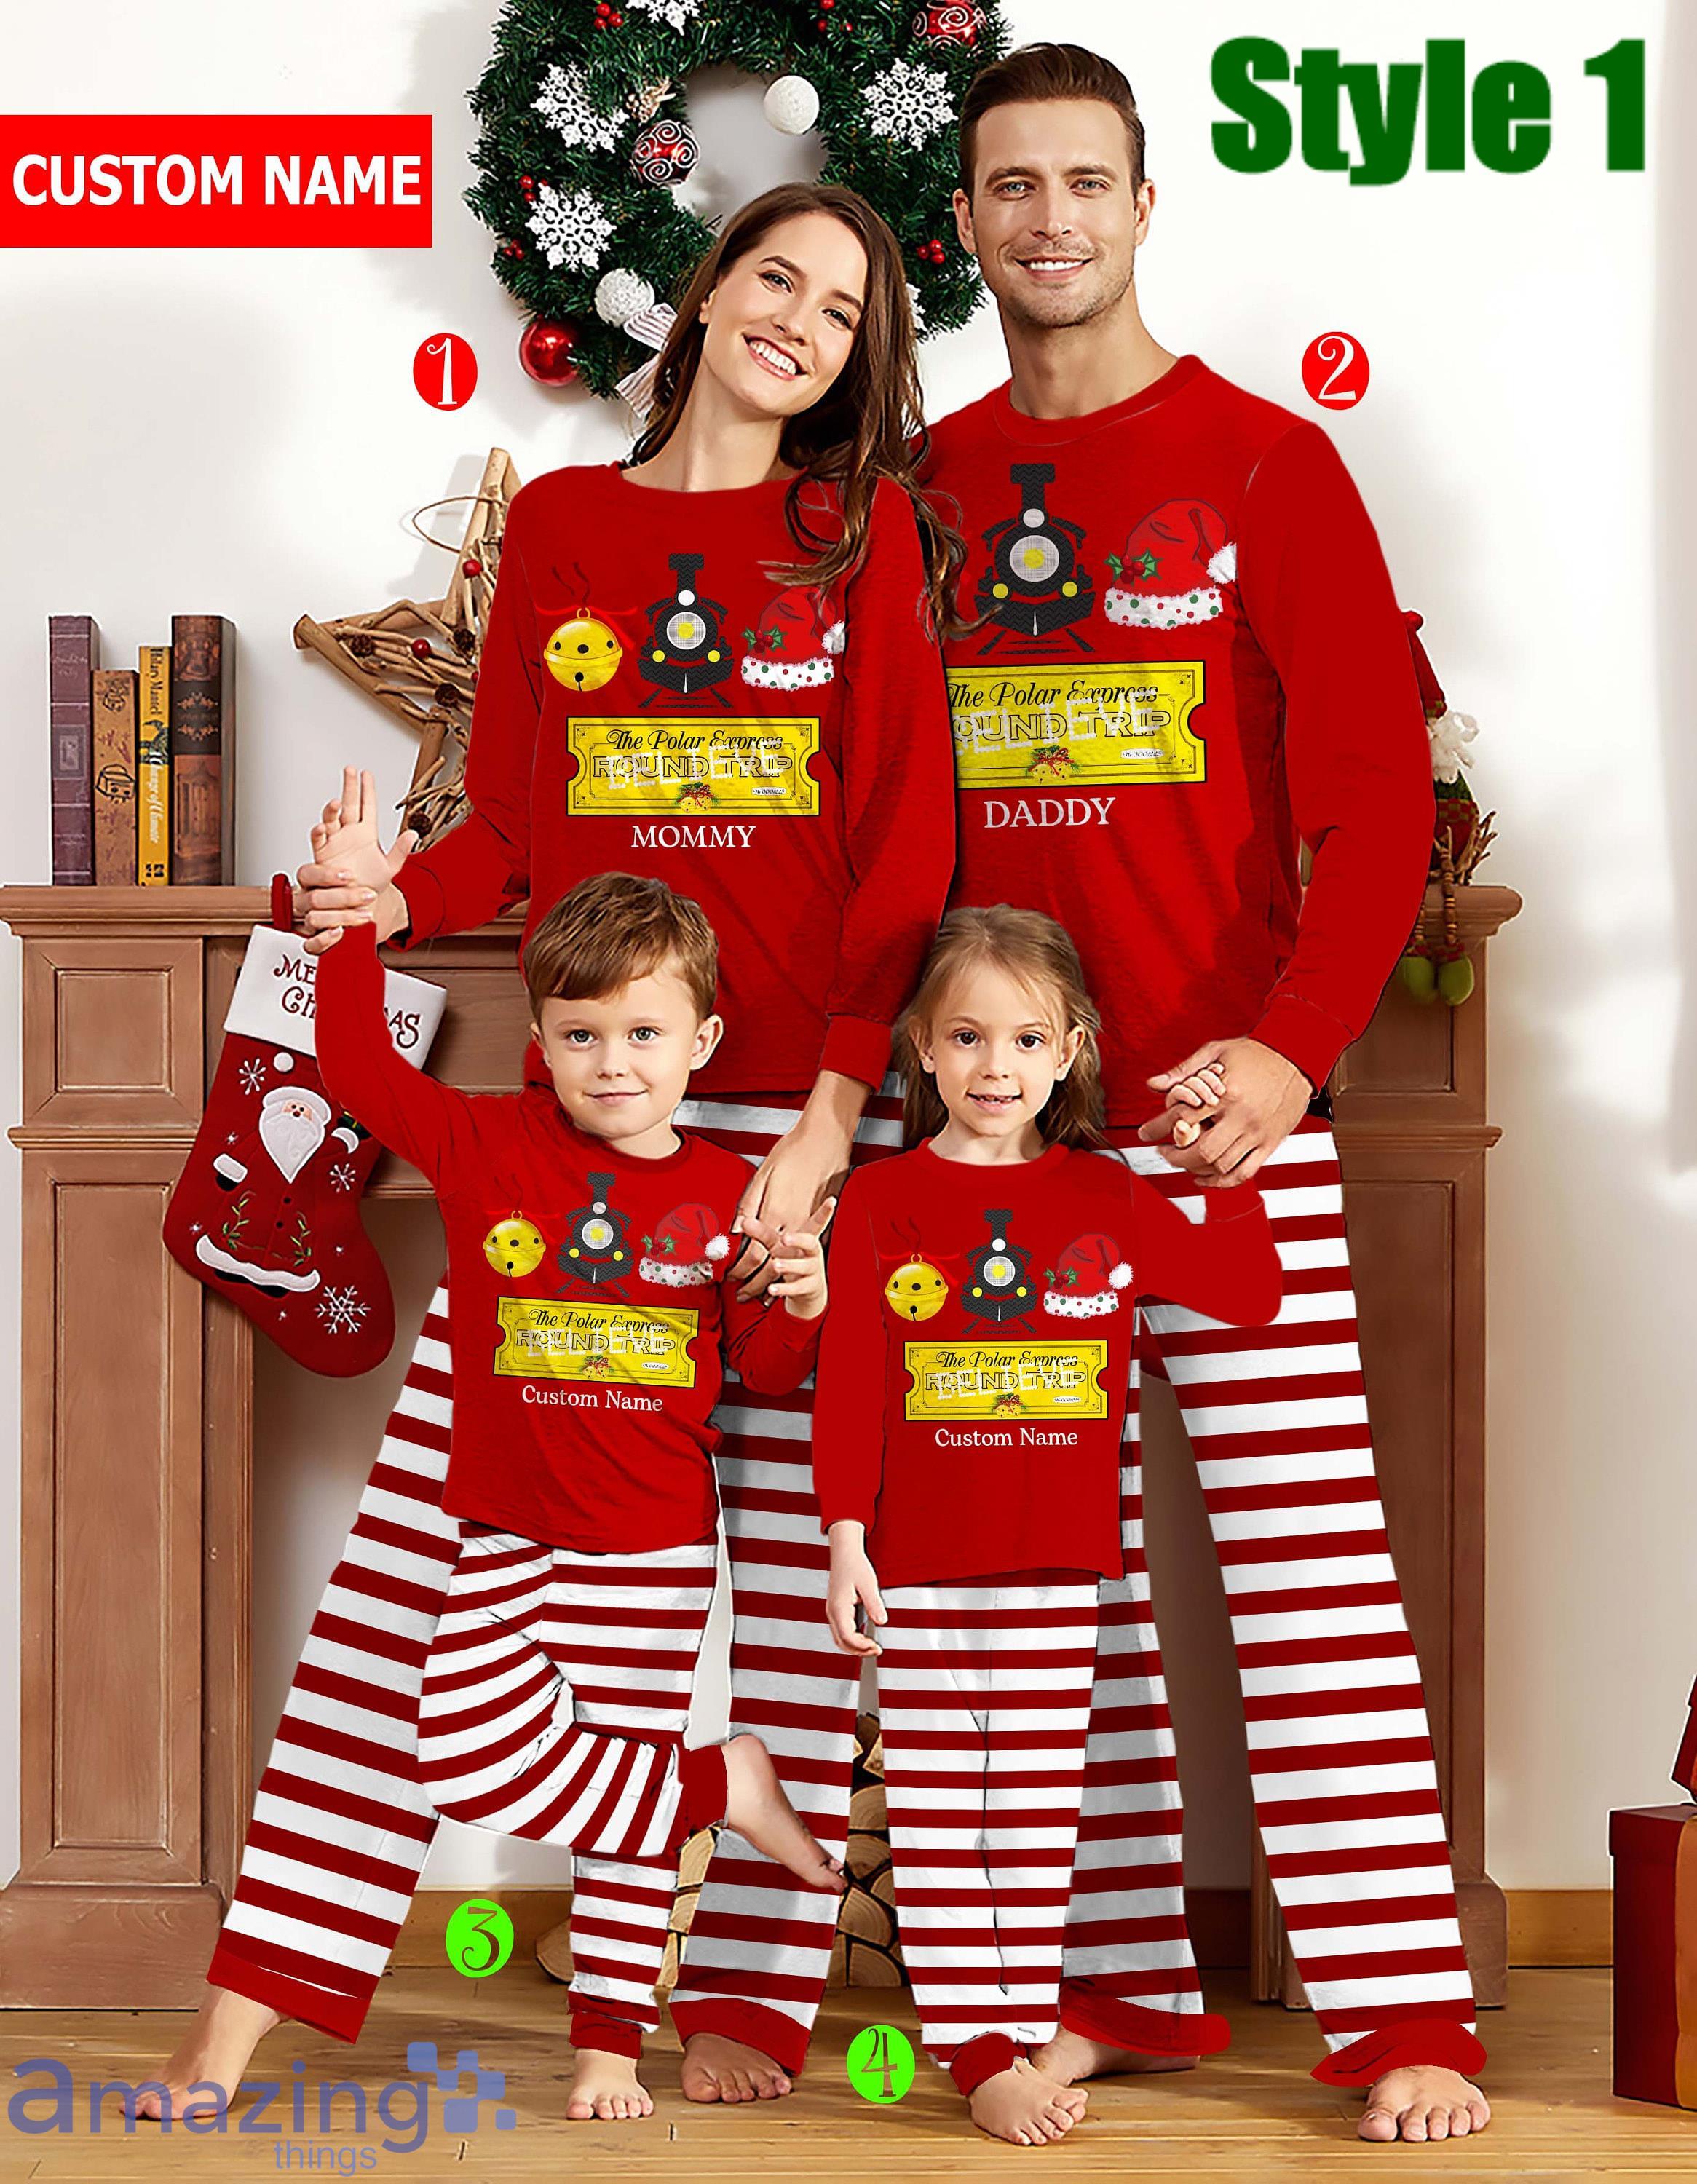 Custom Name Christmas Red One The Vip Polar Express Matching Family Pajamas Product Photo 1